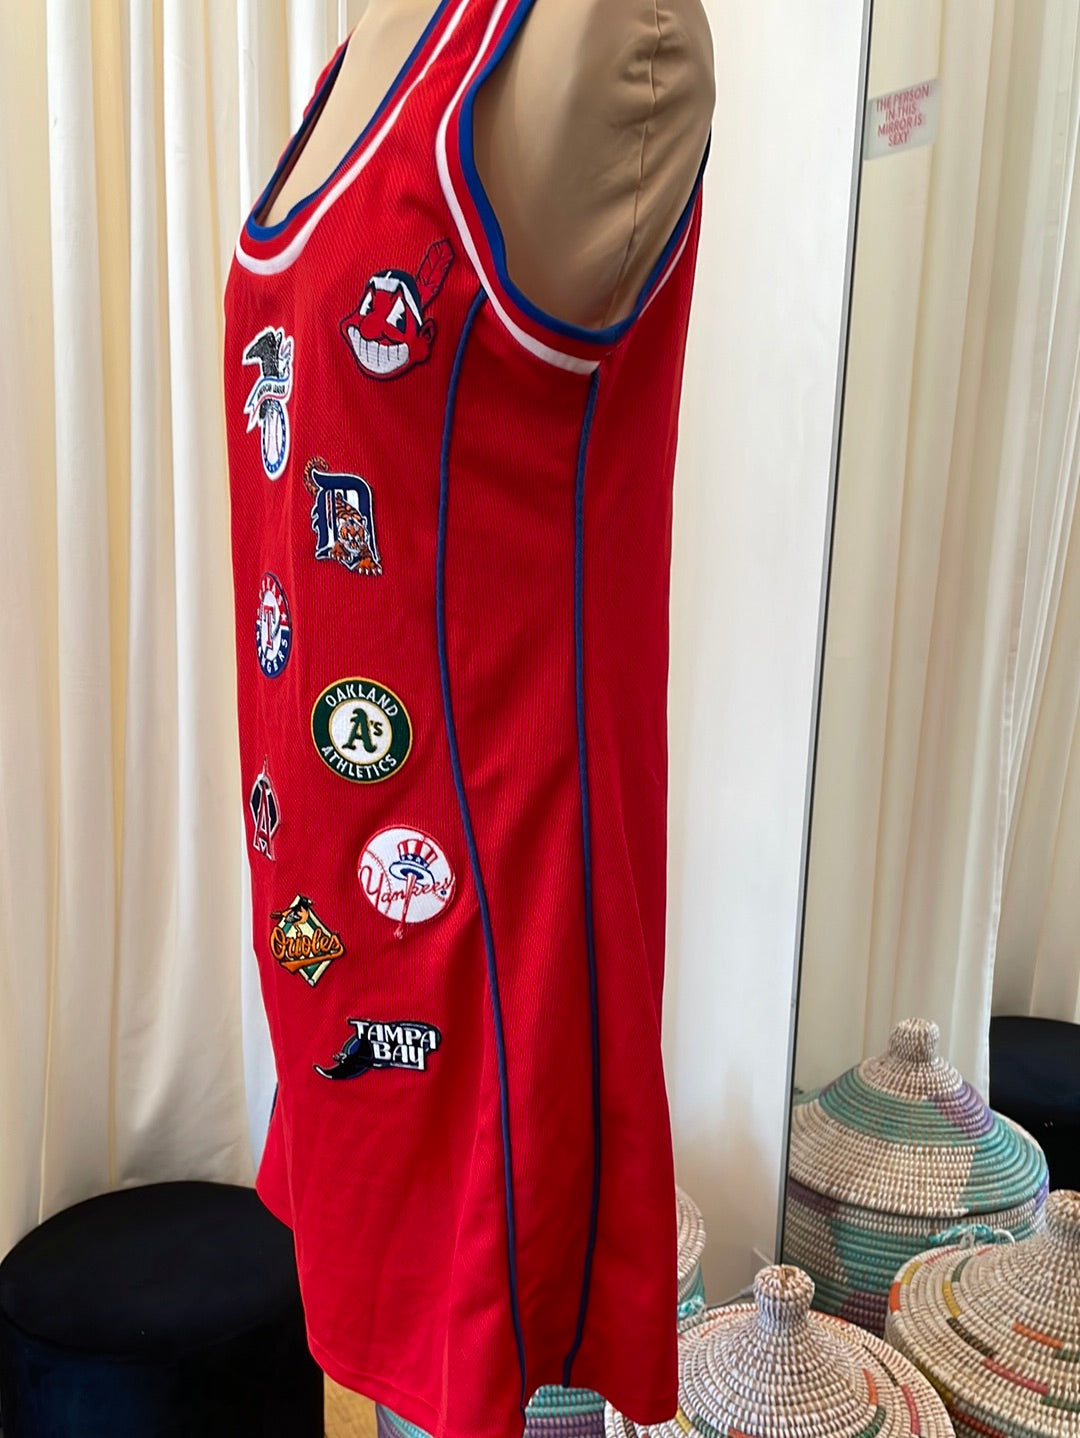 Major League Baseball Jersey Red Dress – IndigoStyle Vintage